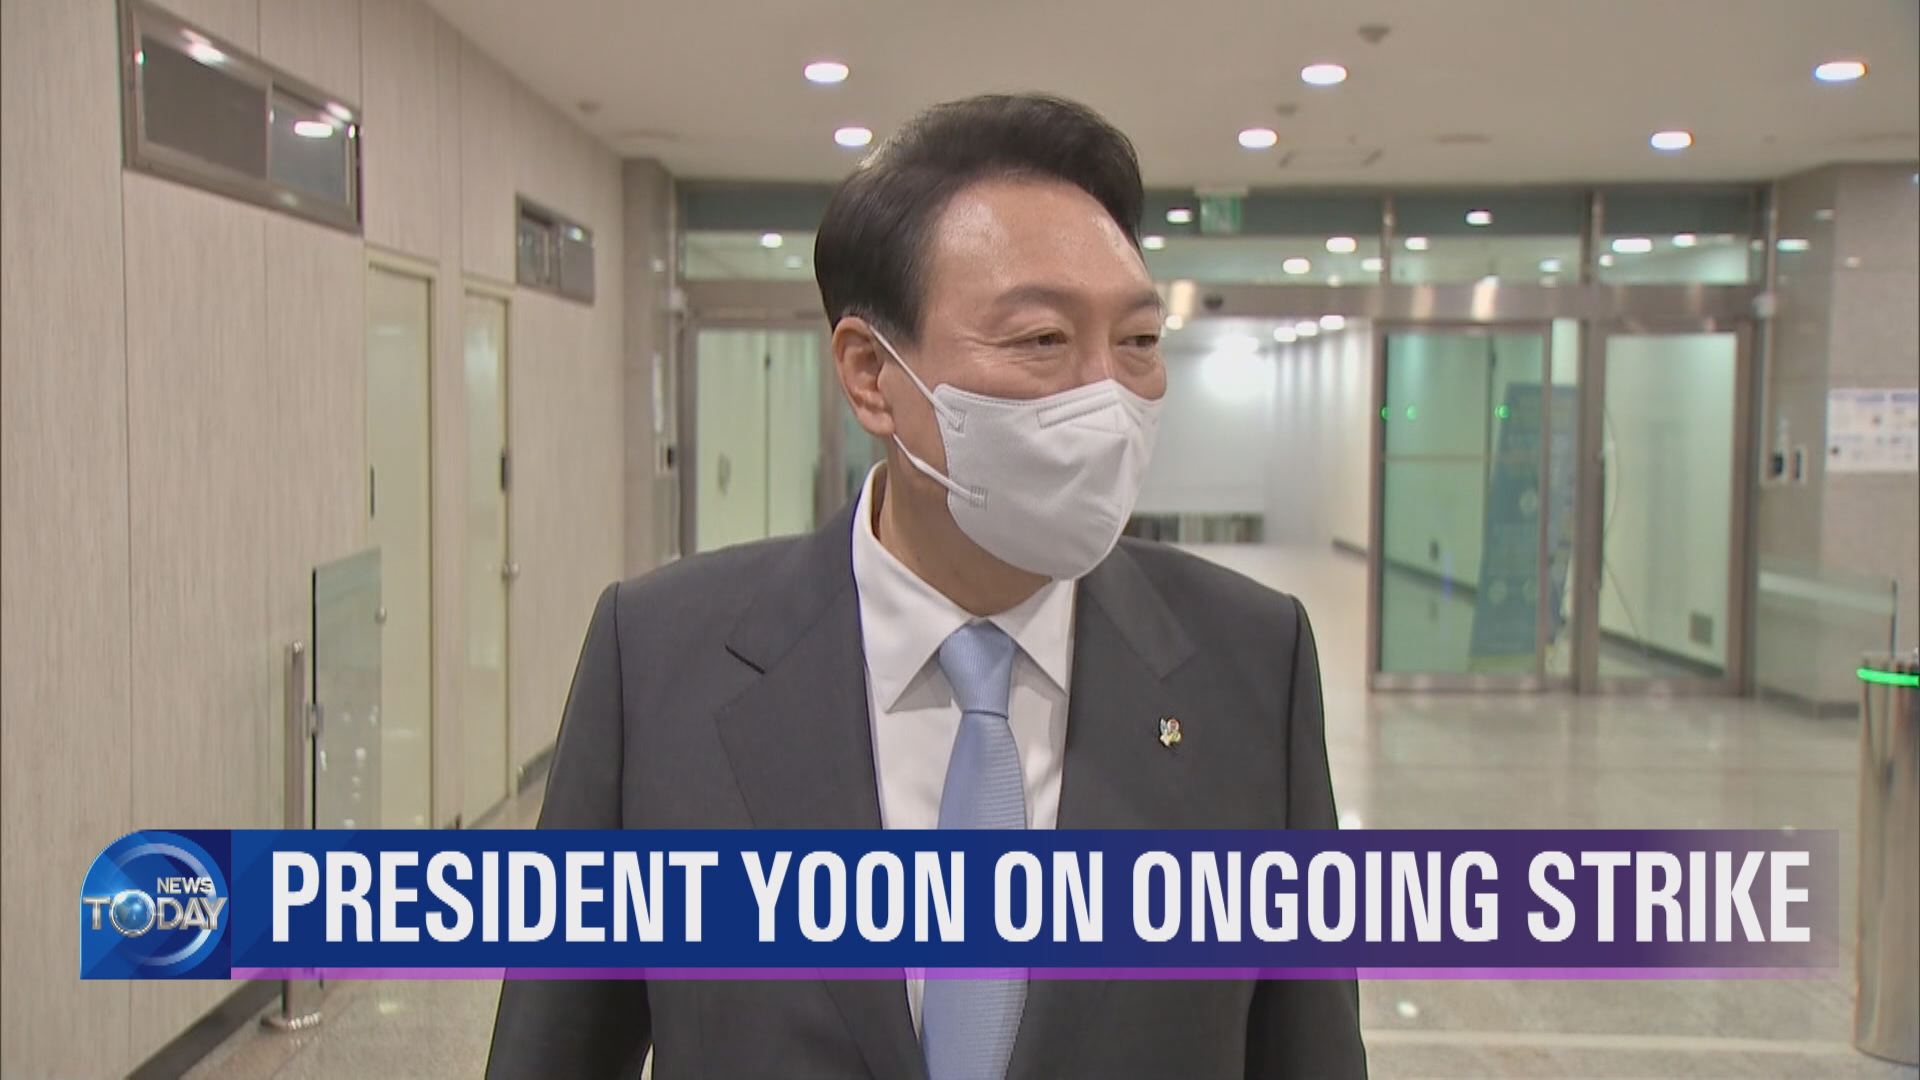 PRESIDENT YOON ON ONGOING STRIKE